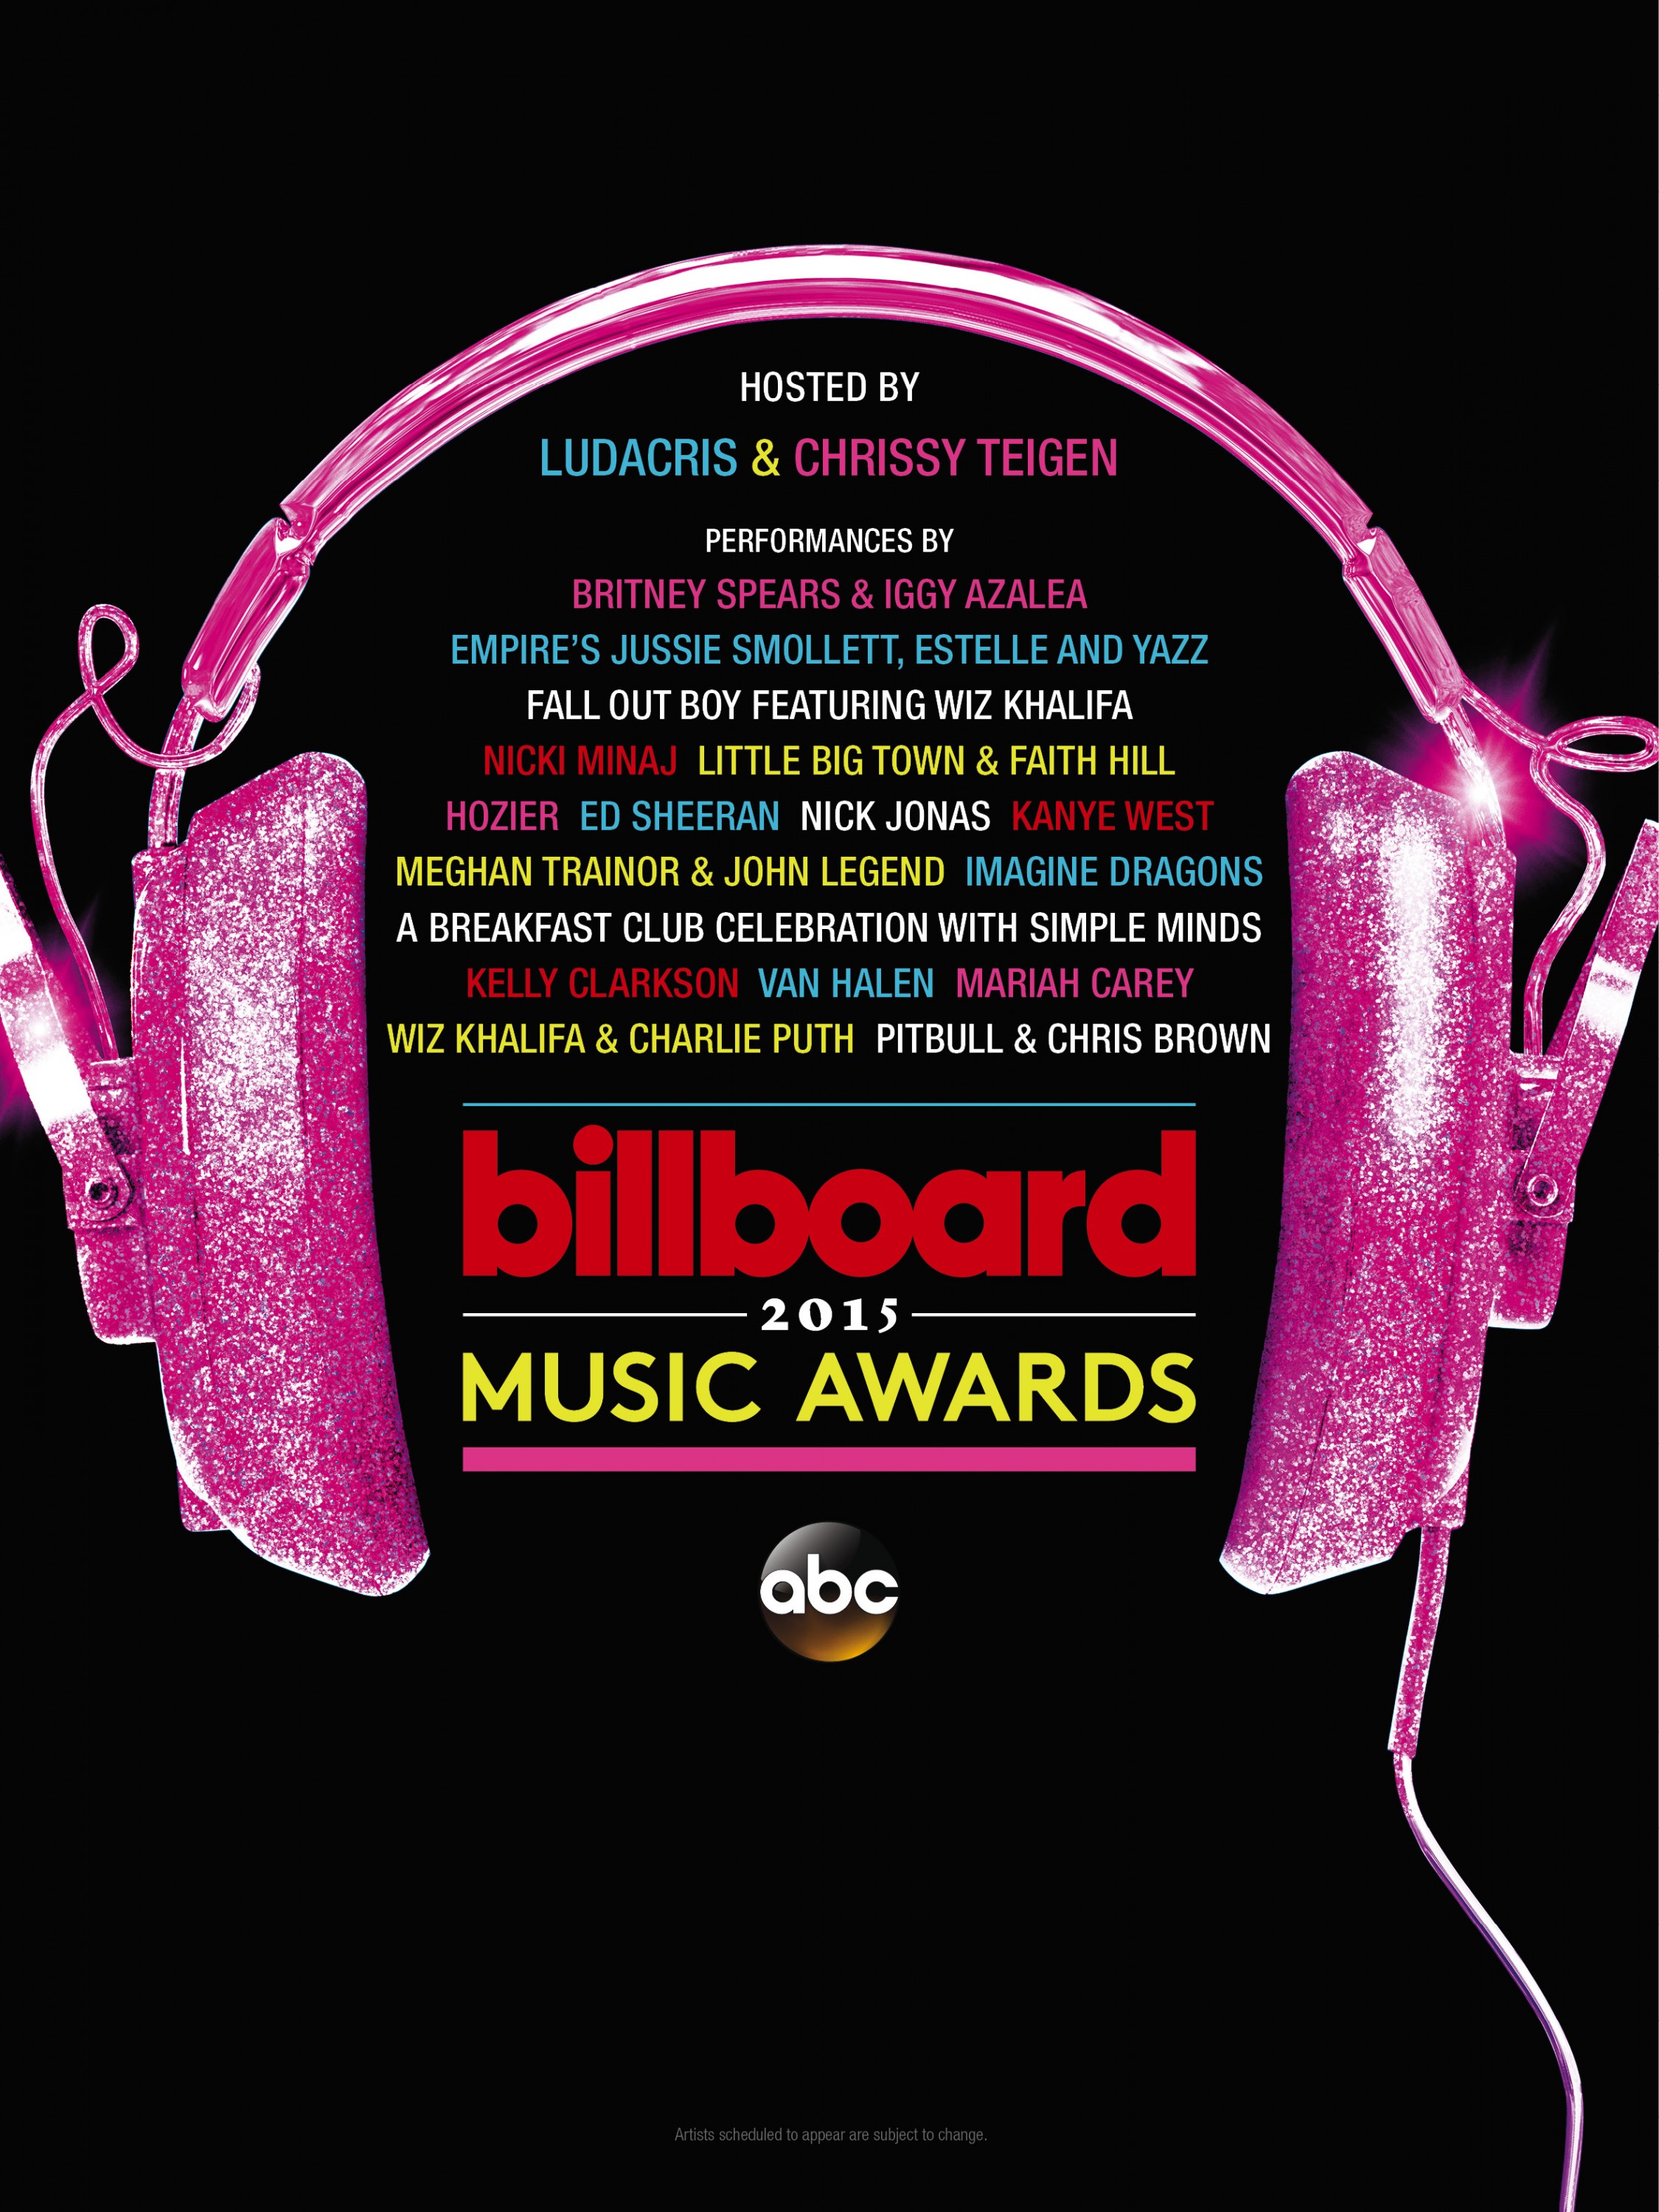 Mega Sized TV Poster Image for 2015 Billboard Music Awards (#5 of 7)